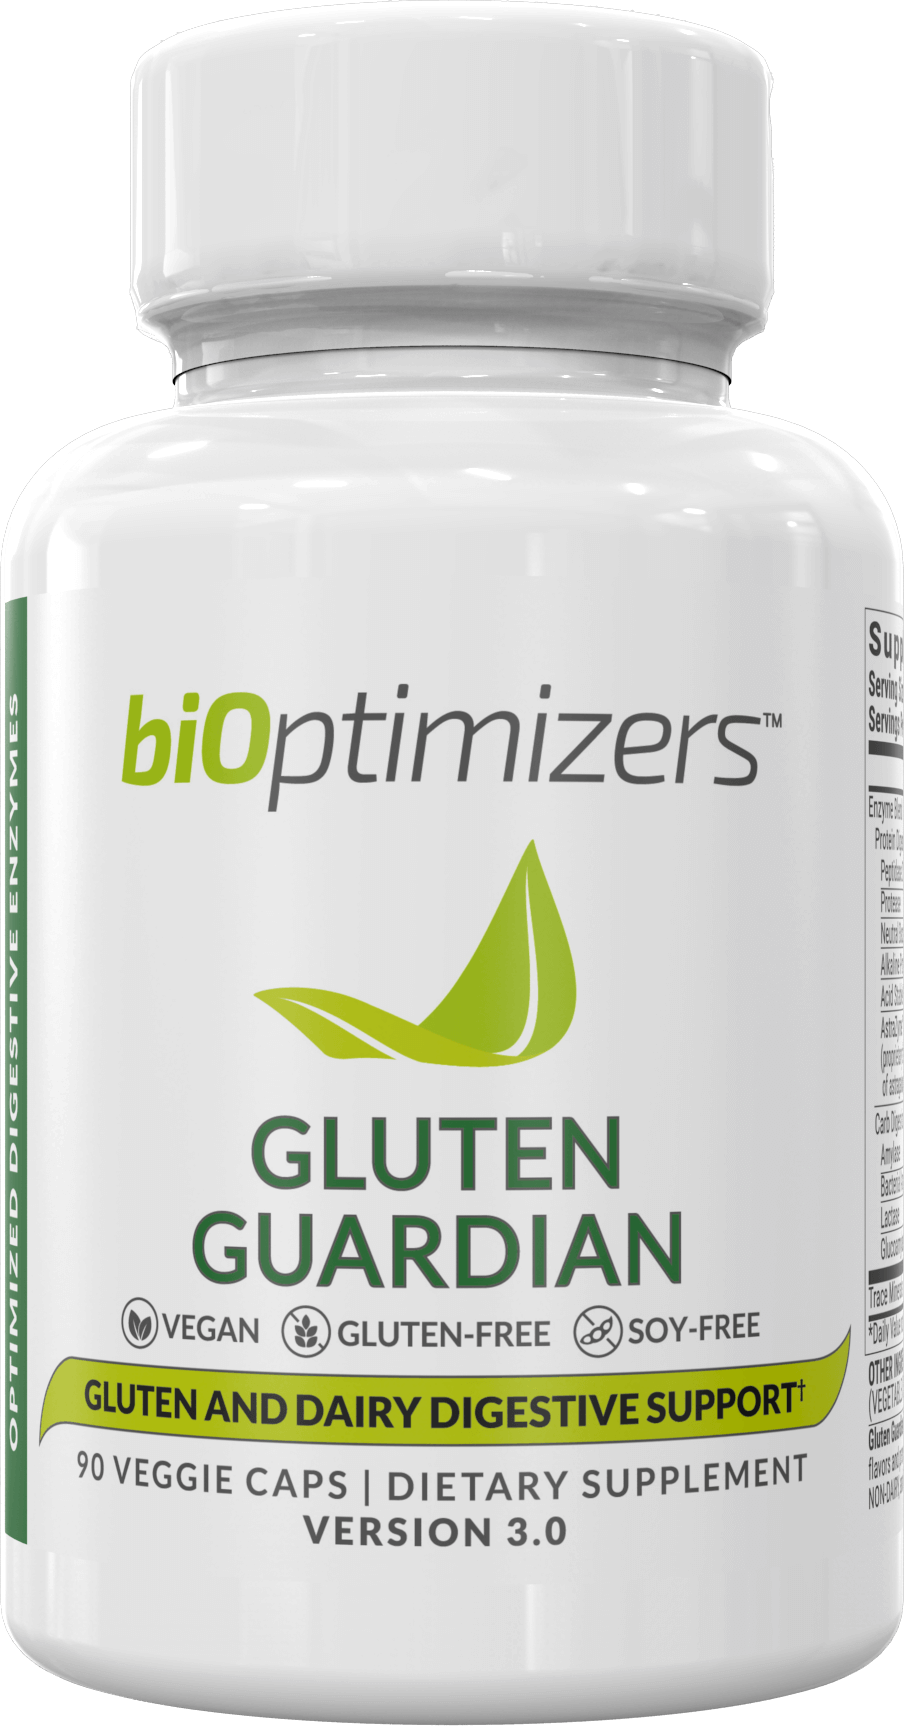 gluten-guardian-90-caps-1-bottle